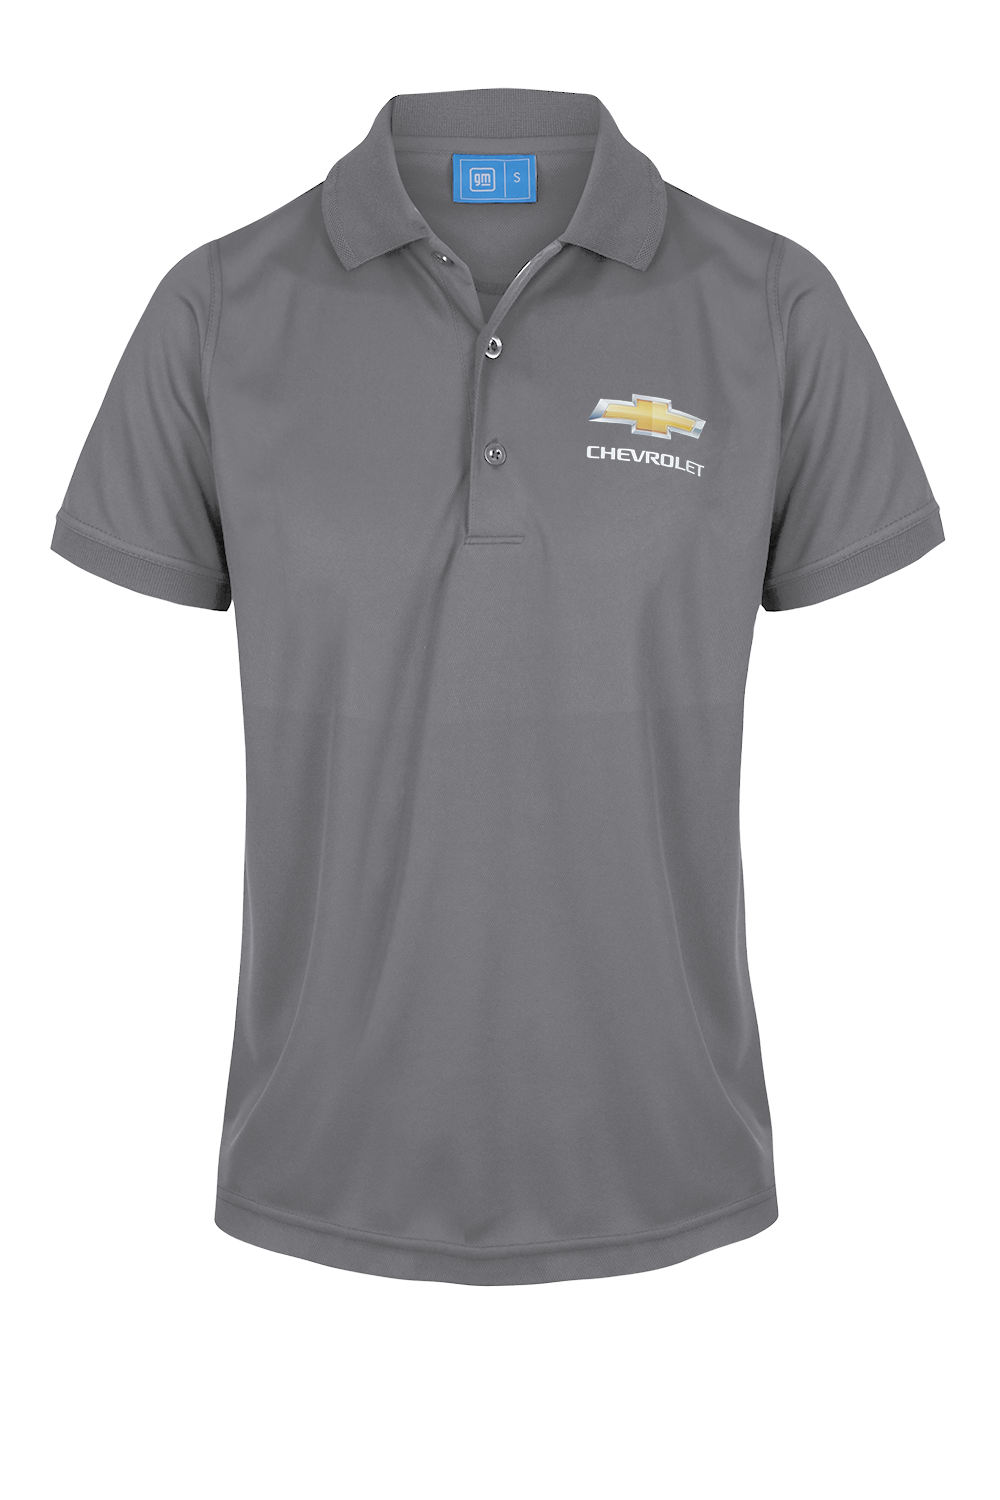 Ladies Chevrolet Polo Shirts Performance Grey – The Distributor Company